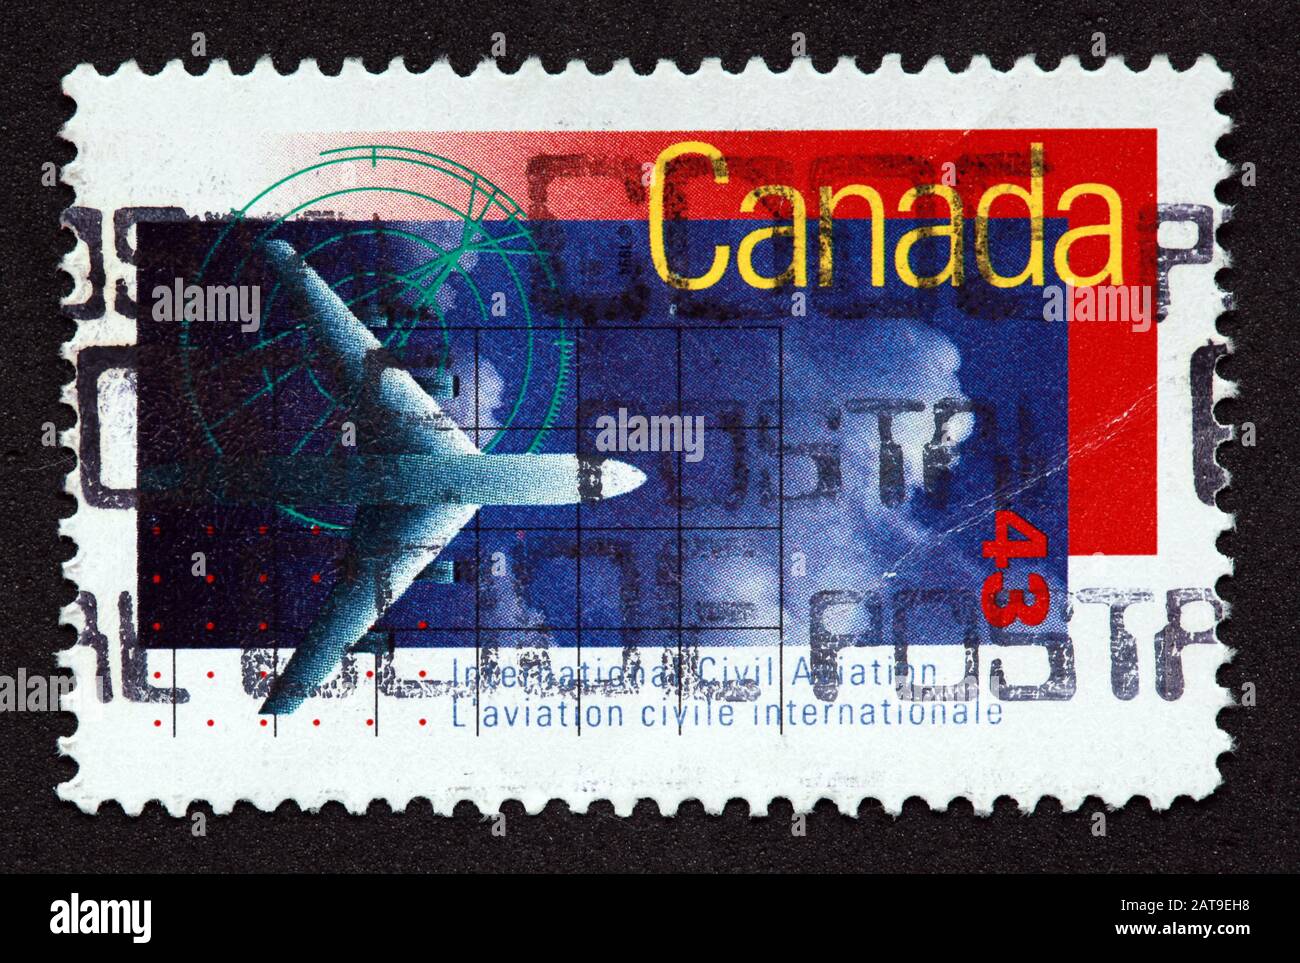 Canadian Stamp, Canada Stamp, Canada Post, usato Stamp, Canada 43 aereo internazionale dell'aviazione civile, aereo postmarked Foto Stock